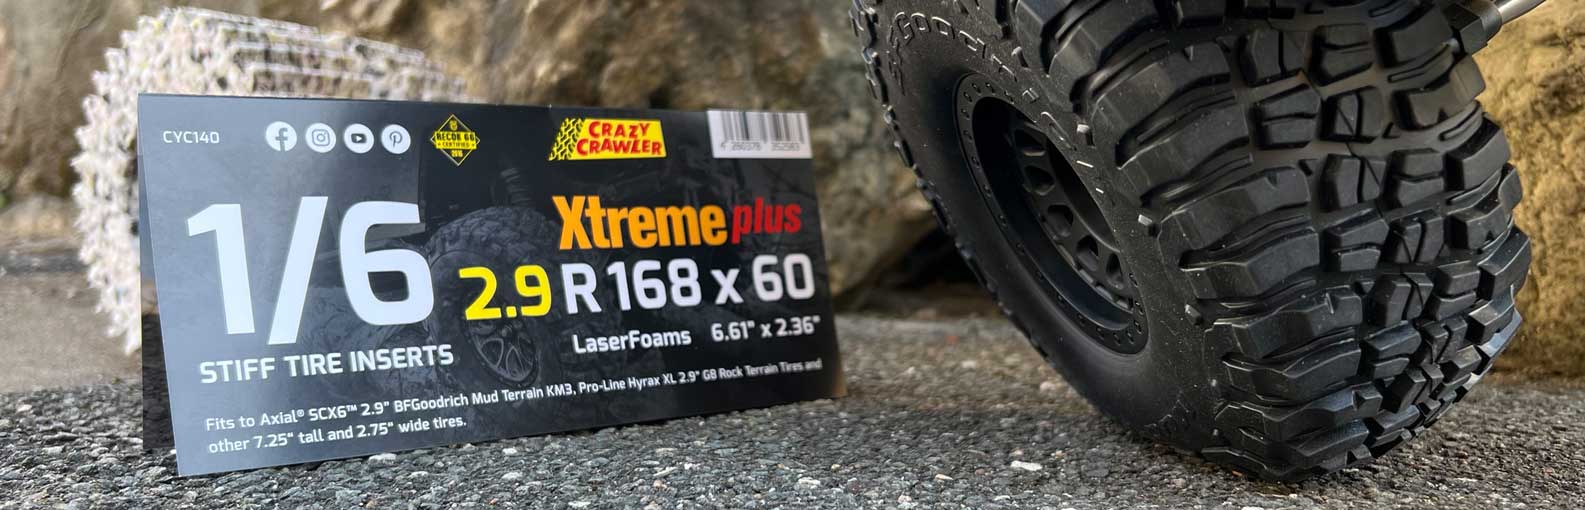 stiff tire insert for SCX6 2.9 R168x60 Xtreme plus